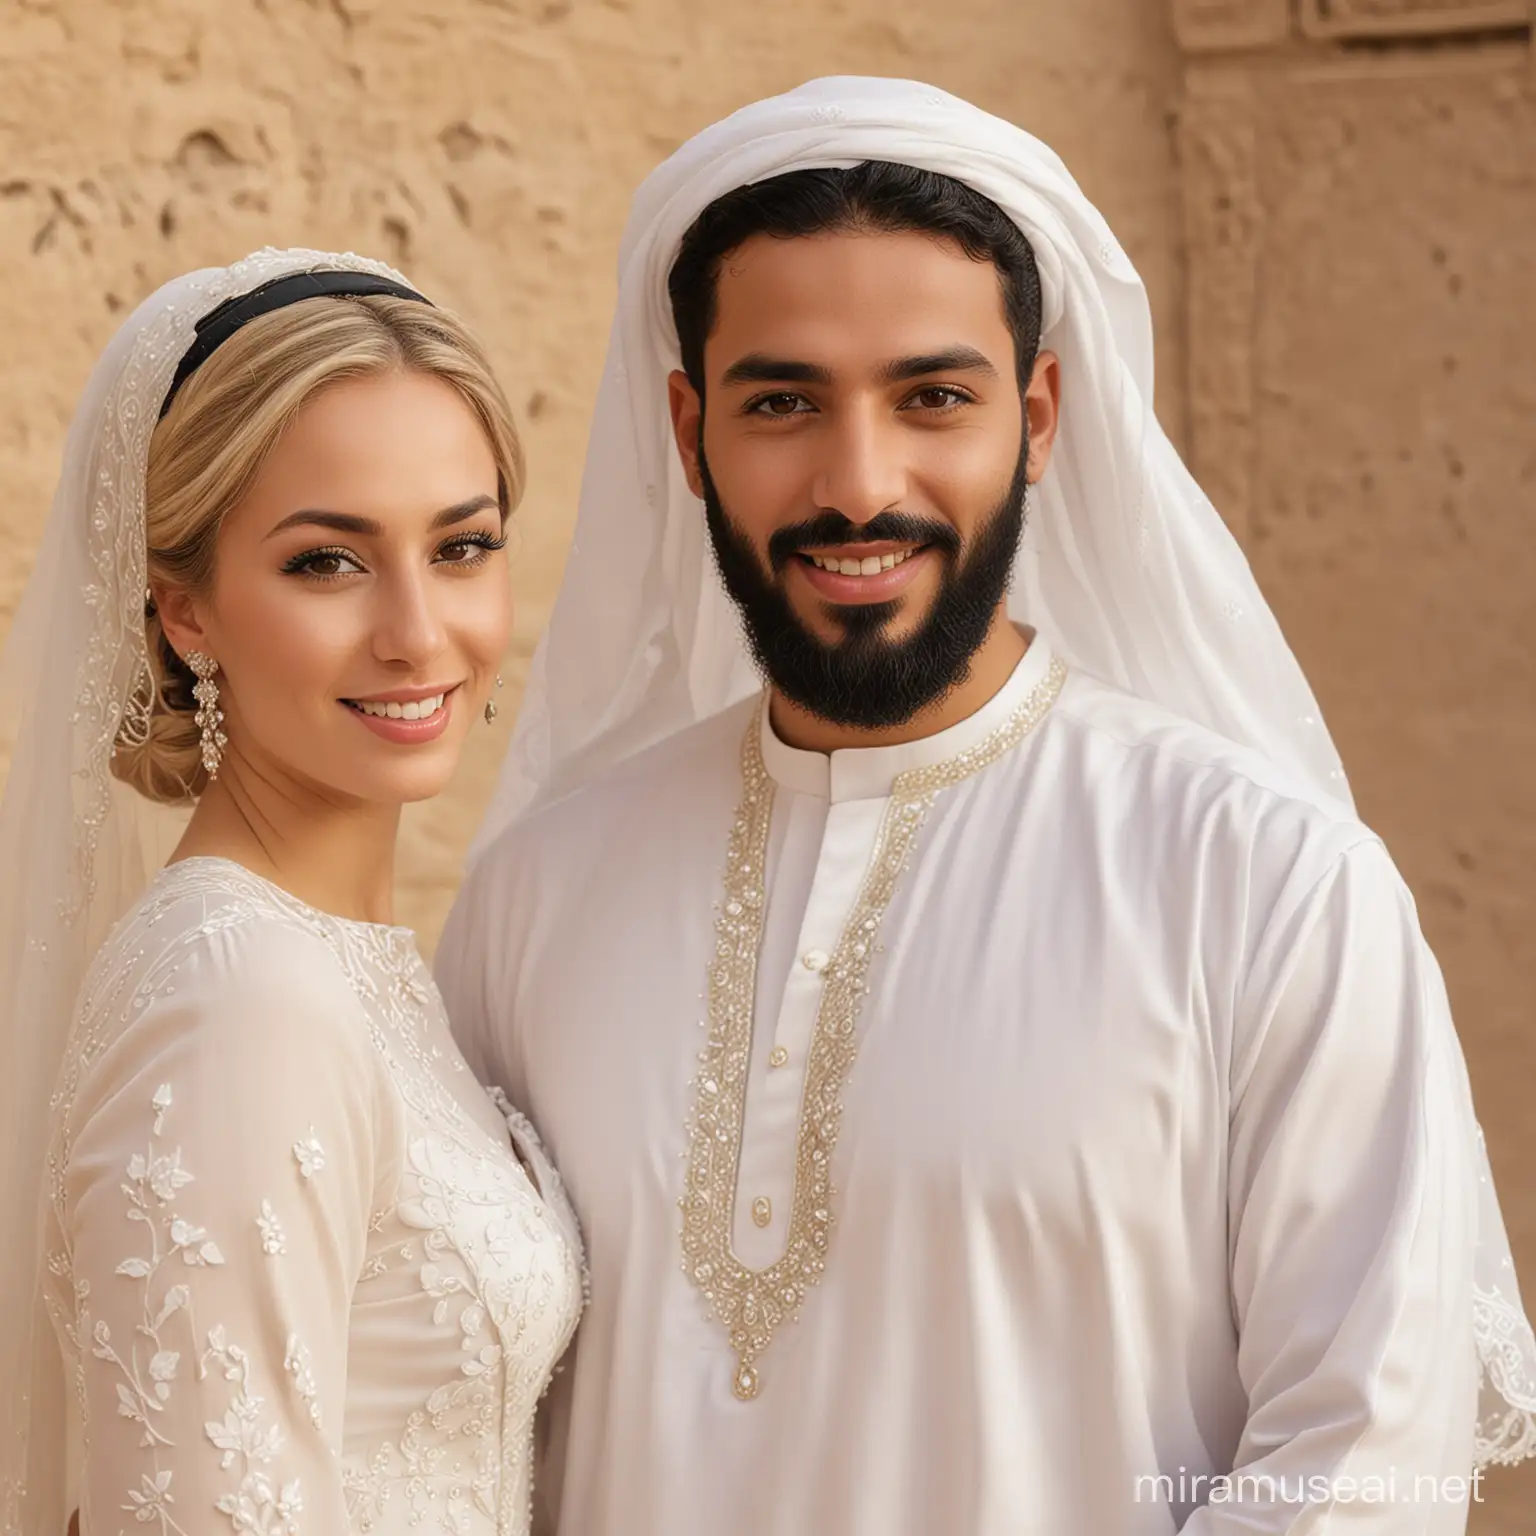 Emirati Groom and Blonde Bride in Traditional Wedding Attire